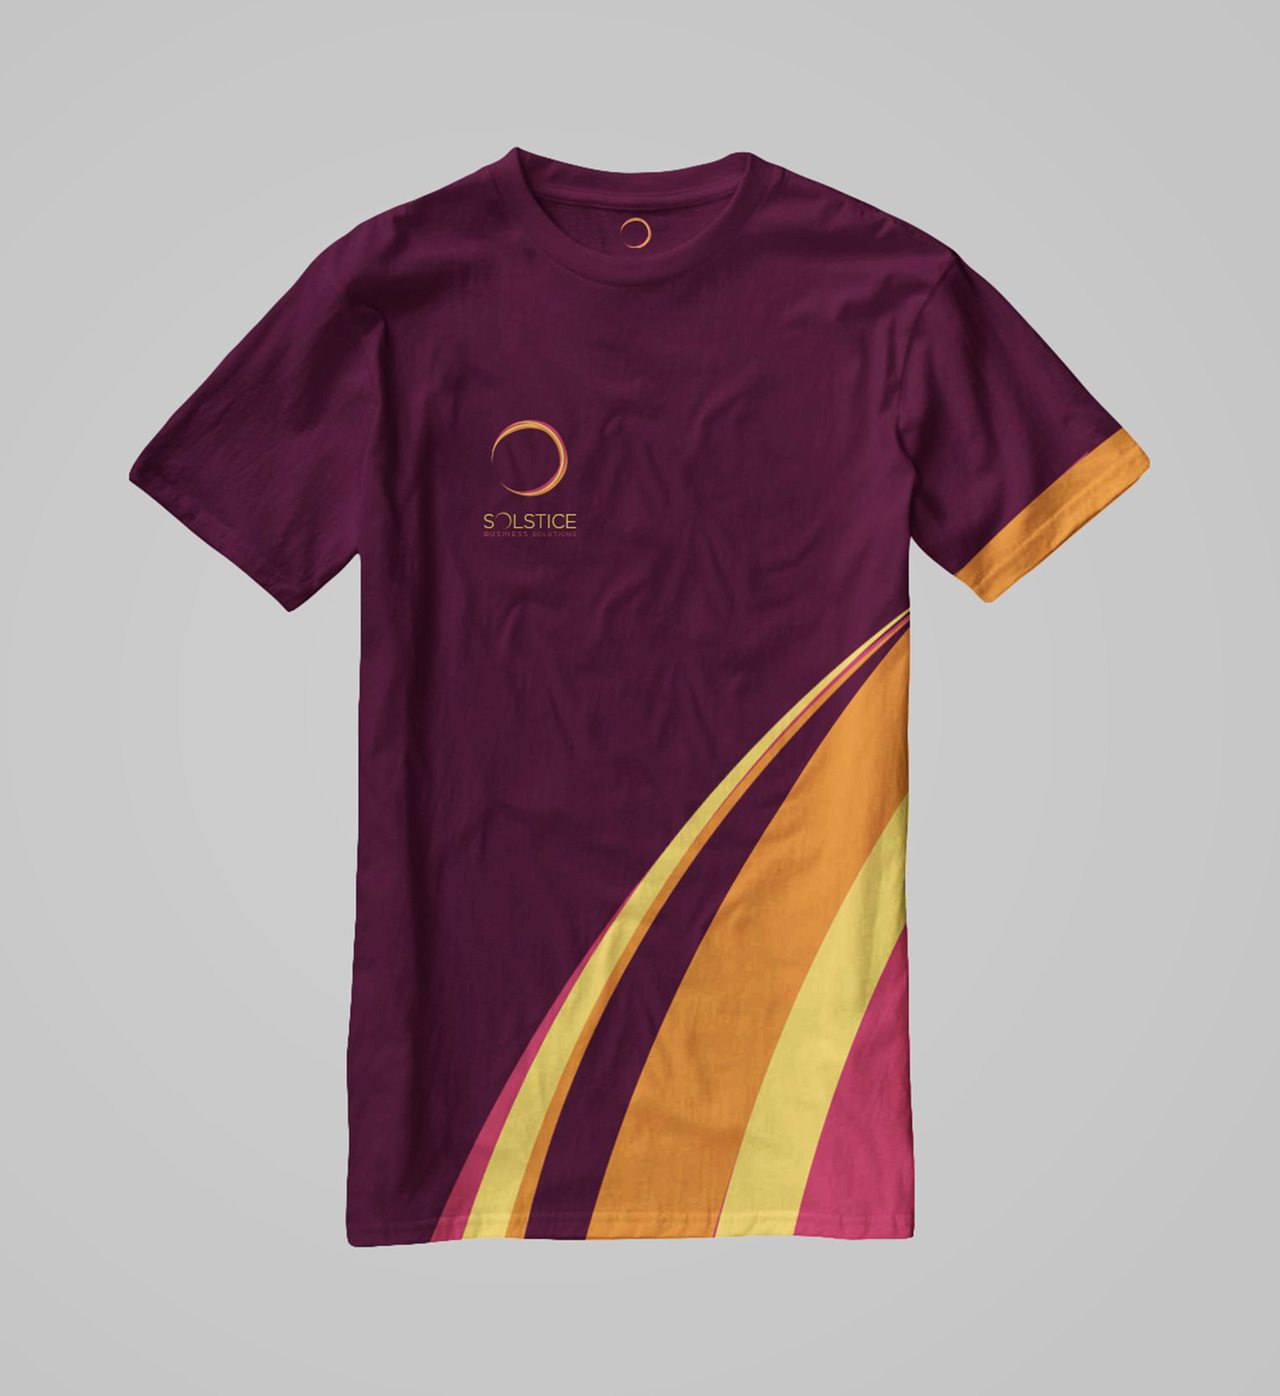 Solstice Calgary Tshirt Design